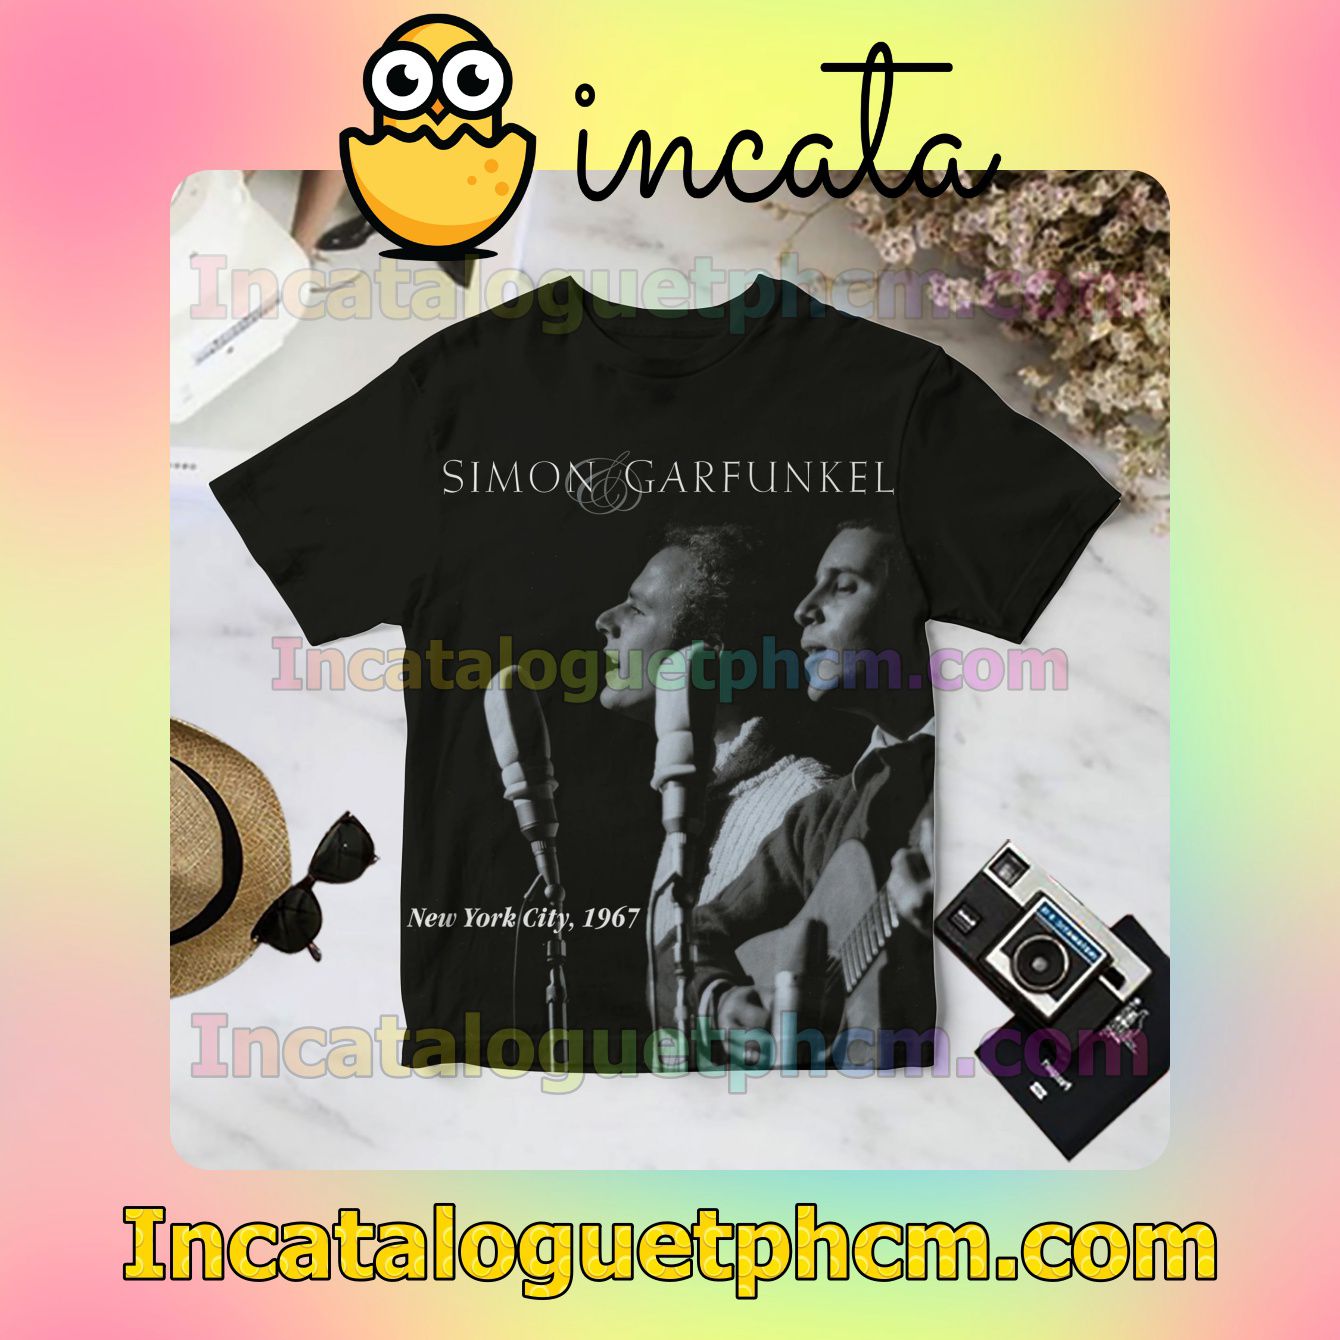 Simon And Garfunkel Live From New York City 1967 Album Cover For Fan Shirt